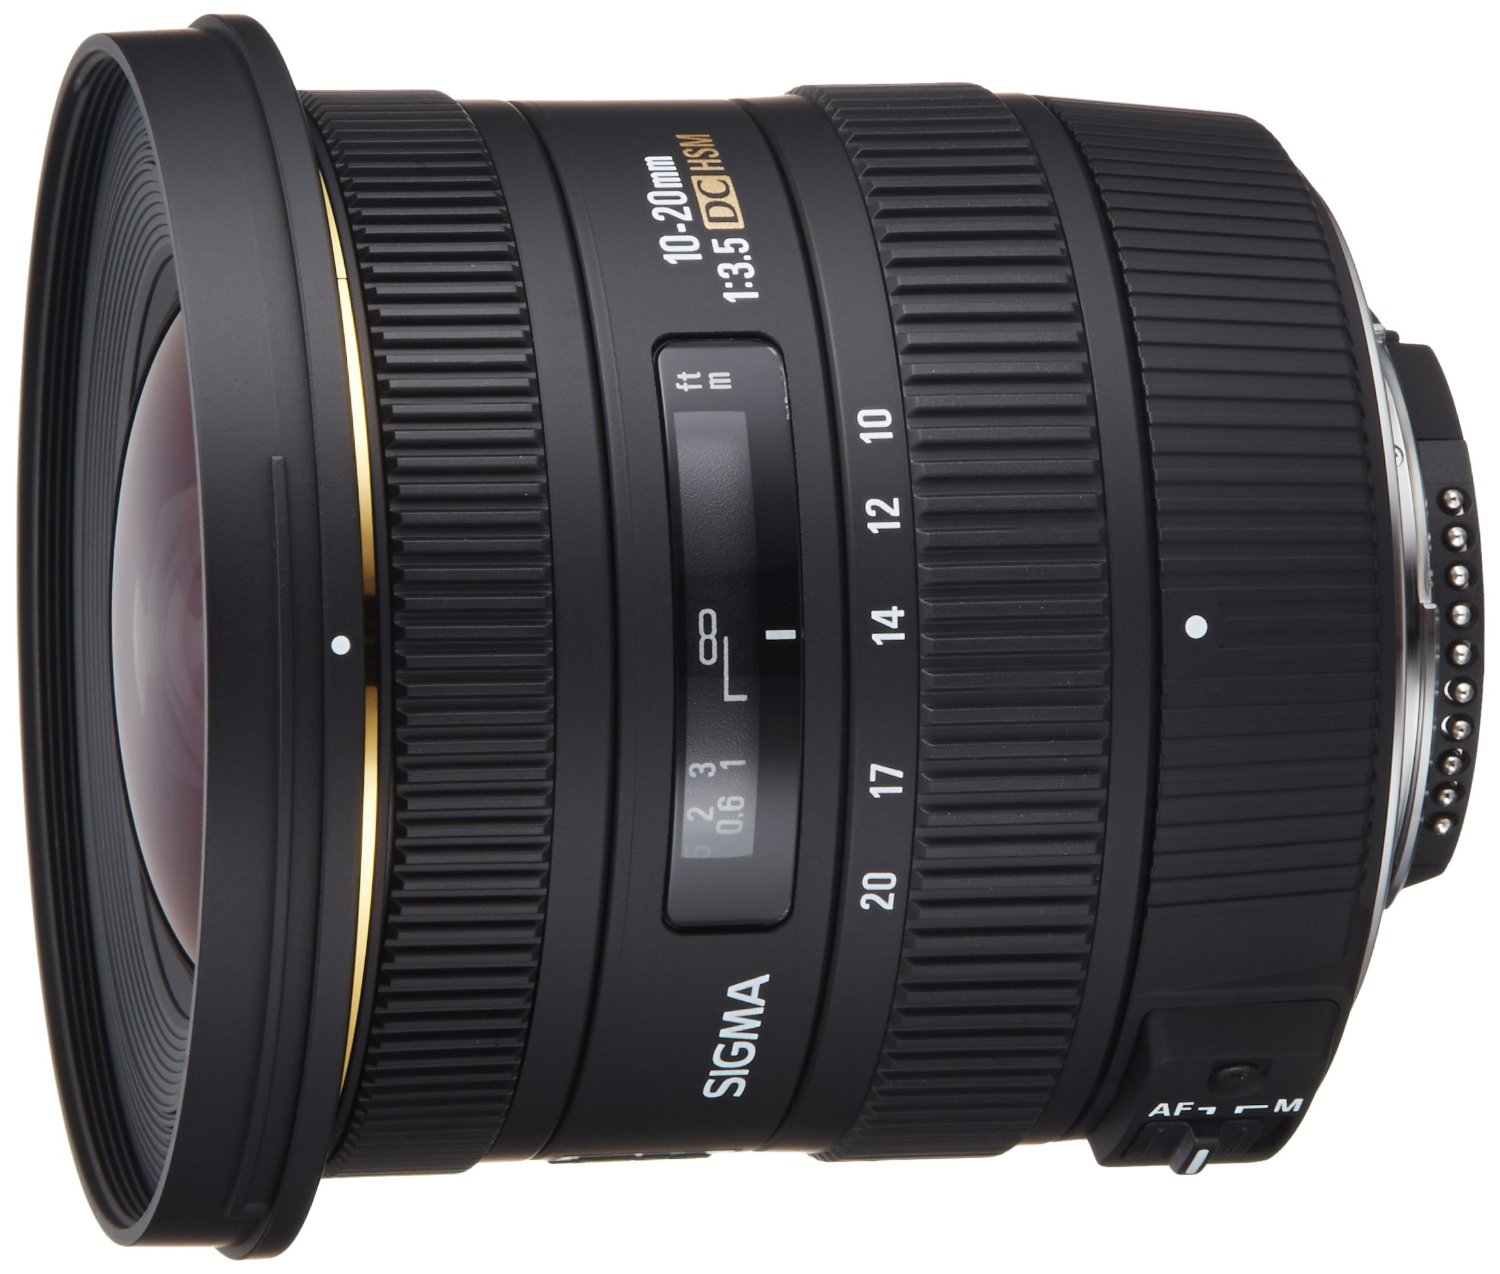 SIGMA Nikon डिजिटल SLR कैमरा के लिए सिग्मा 10-20mm f / 3.5 EX DC HSM ELD SLD एस्फेरिकल सुपर वाइड एंगल लेंस